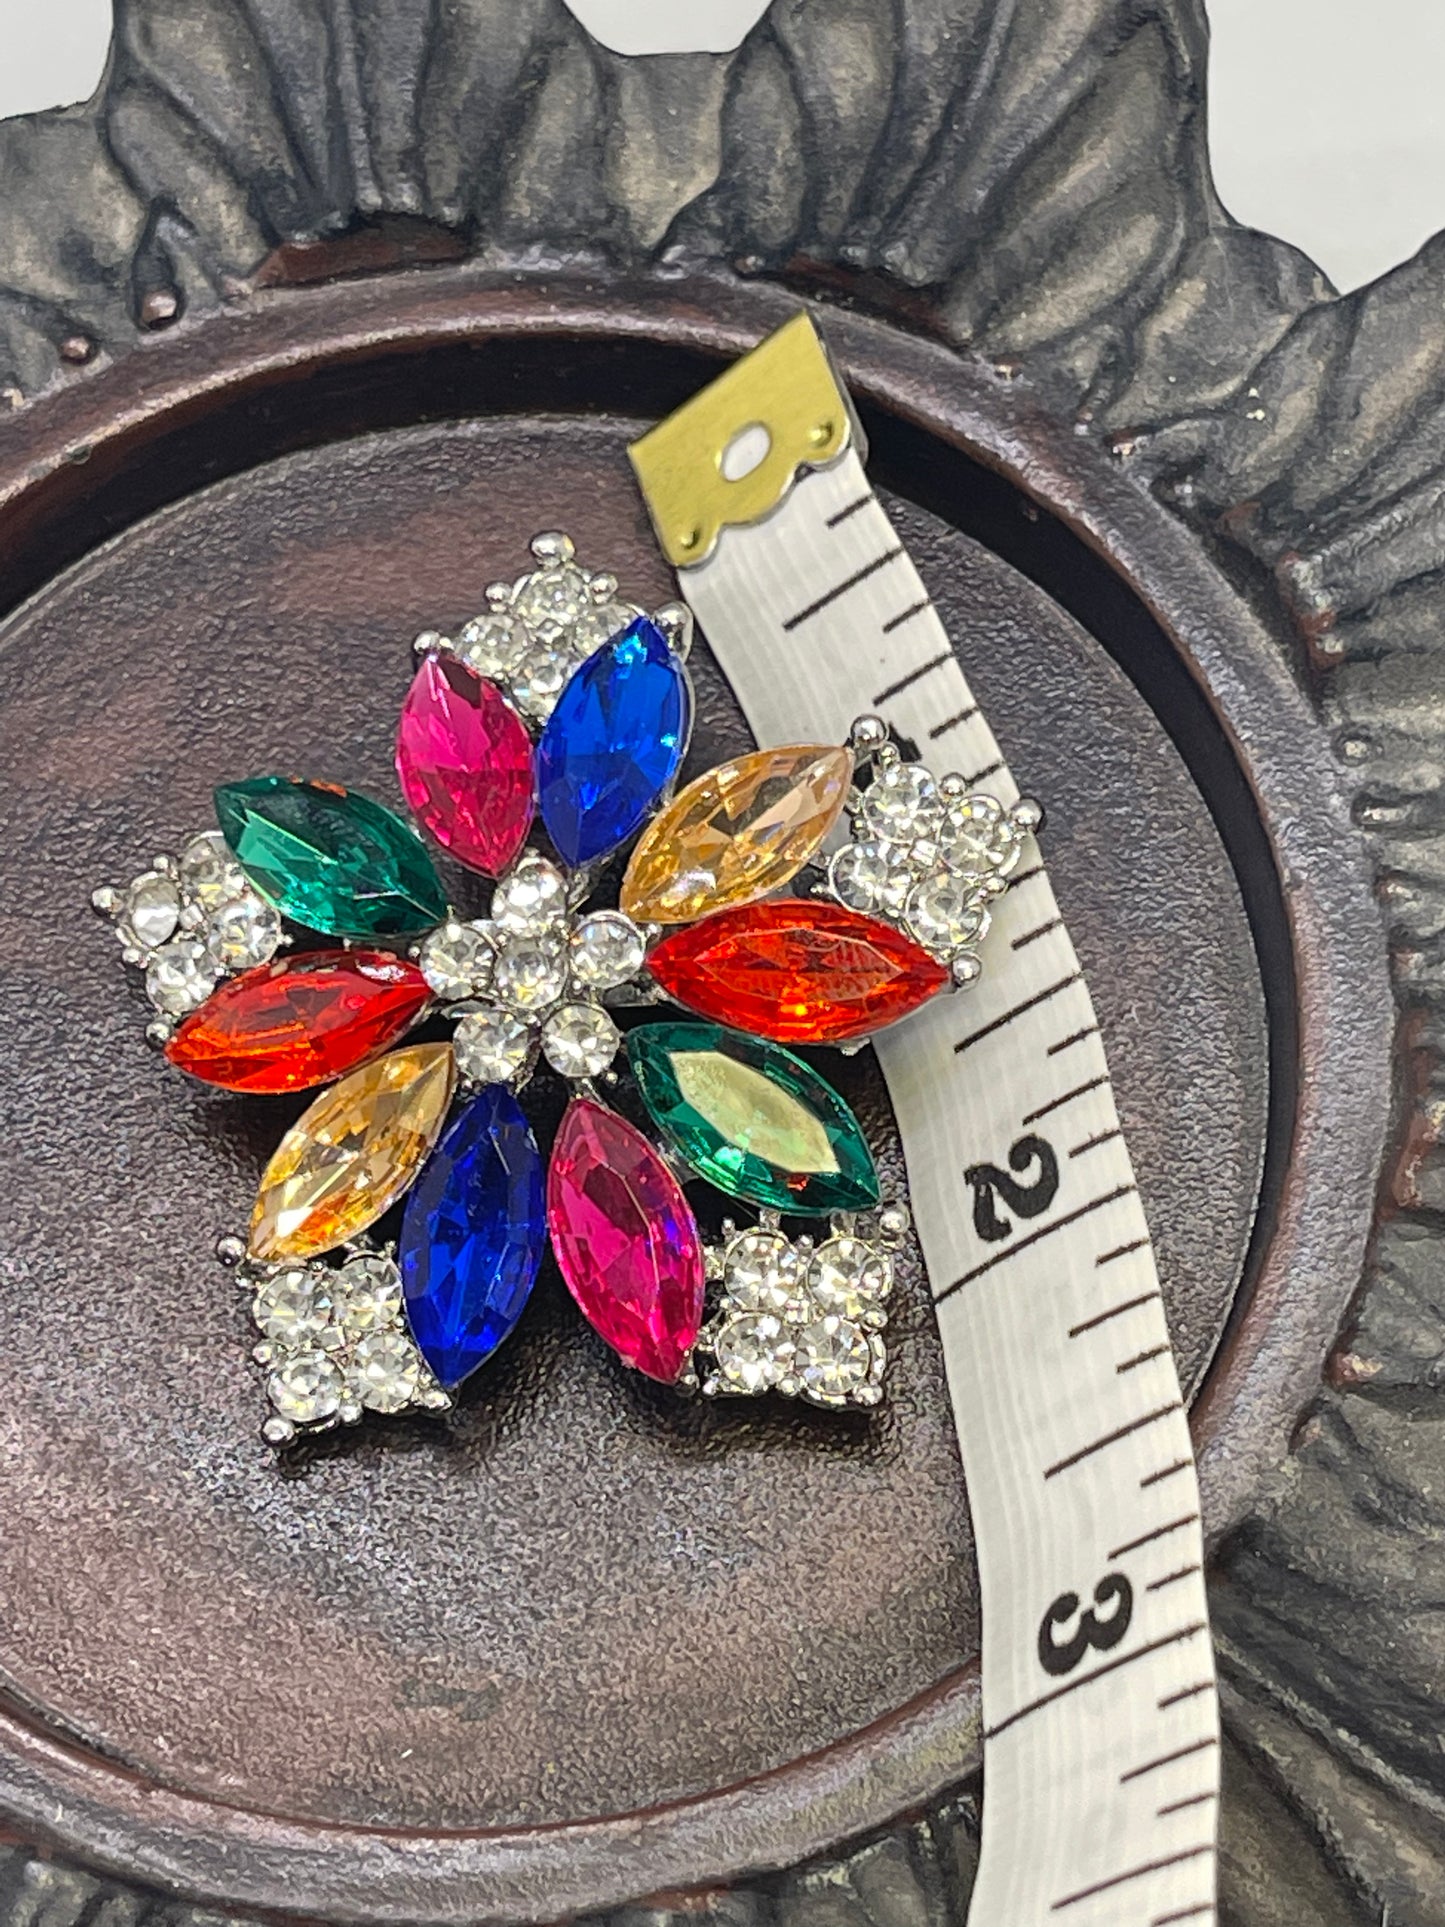 Luxe’s Rainbow Crystal Star flower Brooch Rhinestone silver gold tone woman with rhinestone gift scarf accessory